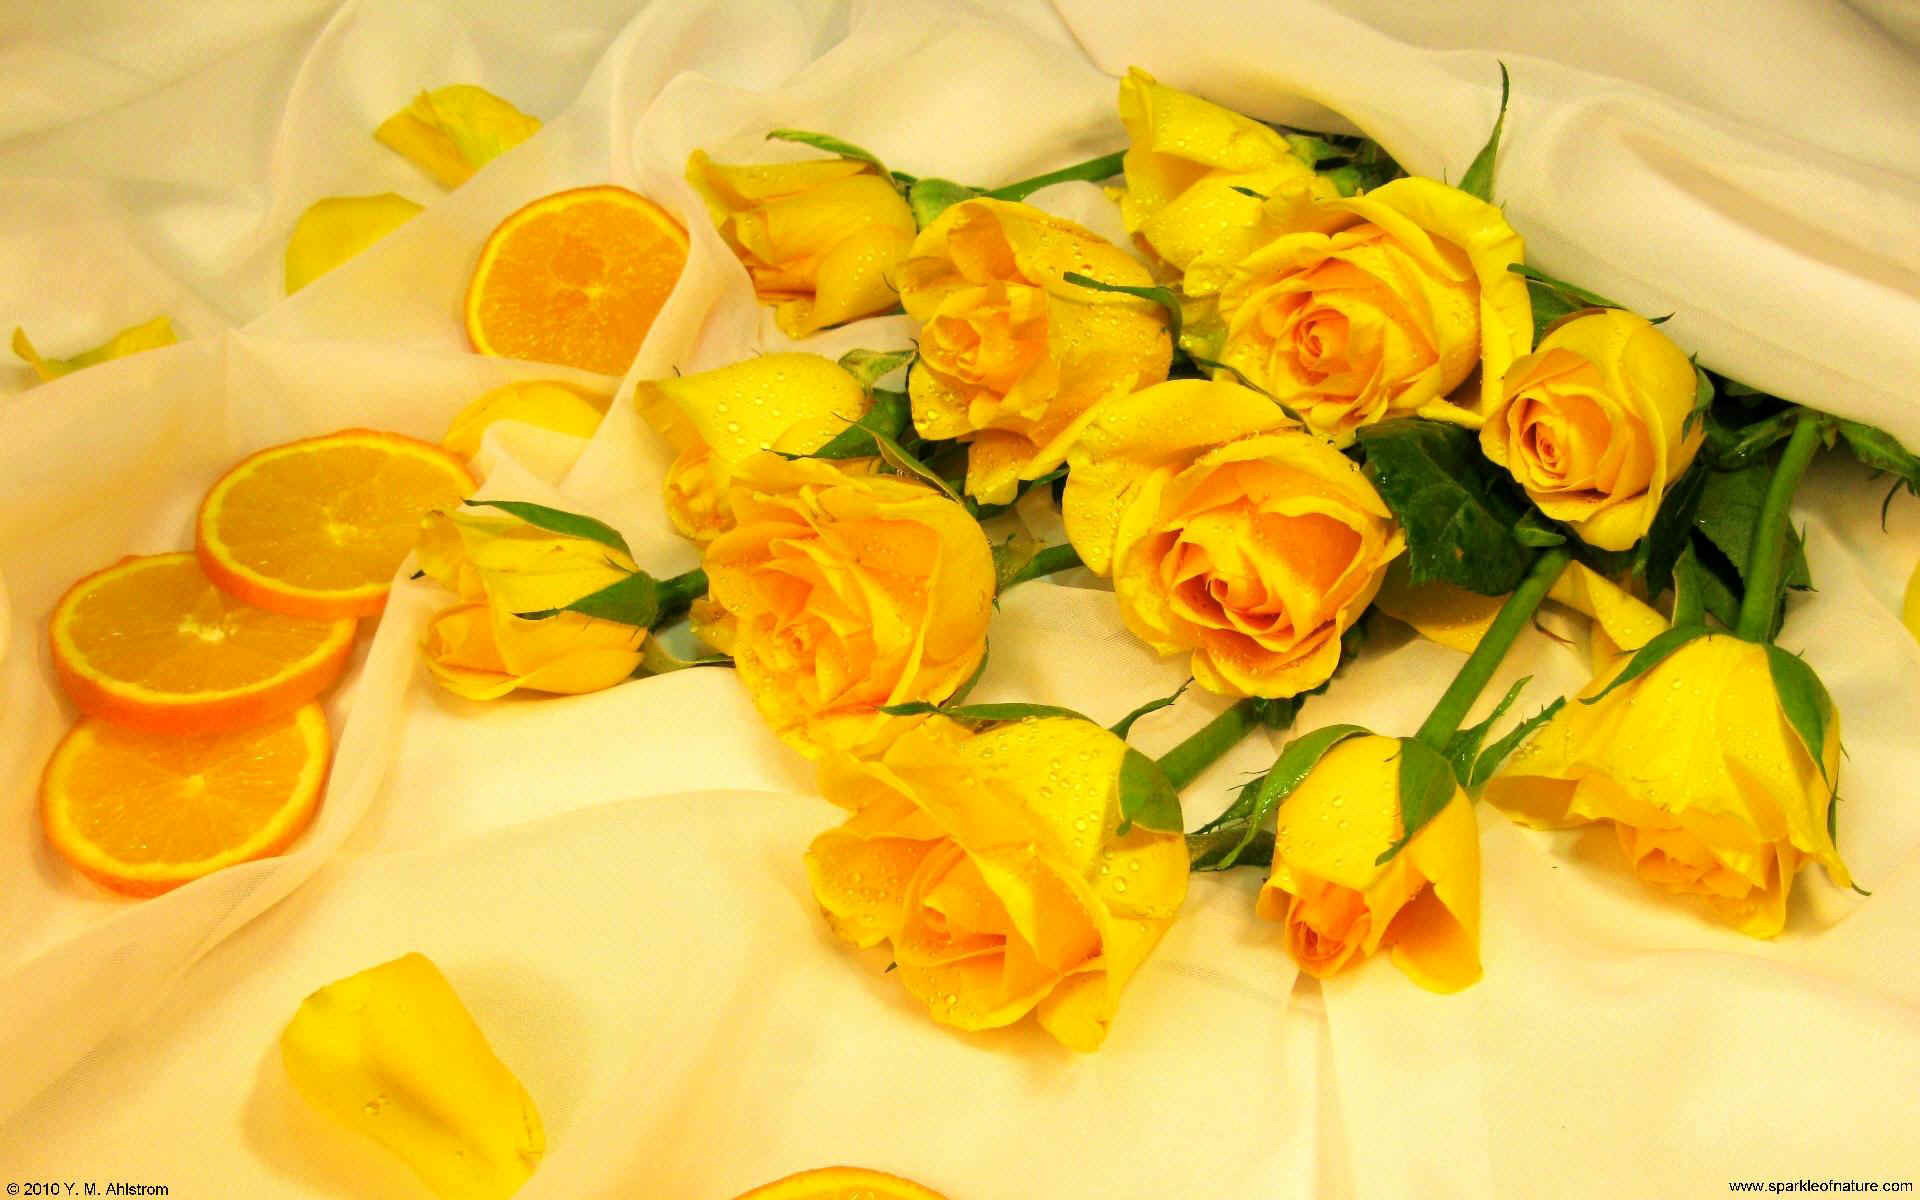 1920x1200 20091 oranges and yellow roses w jpg 245547 bytes 